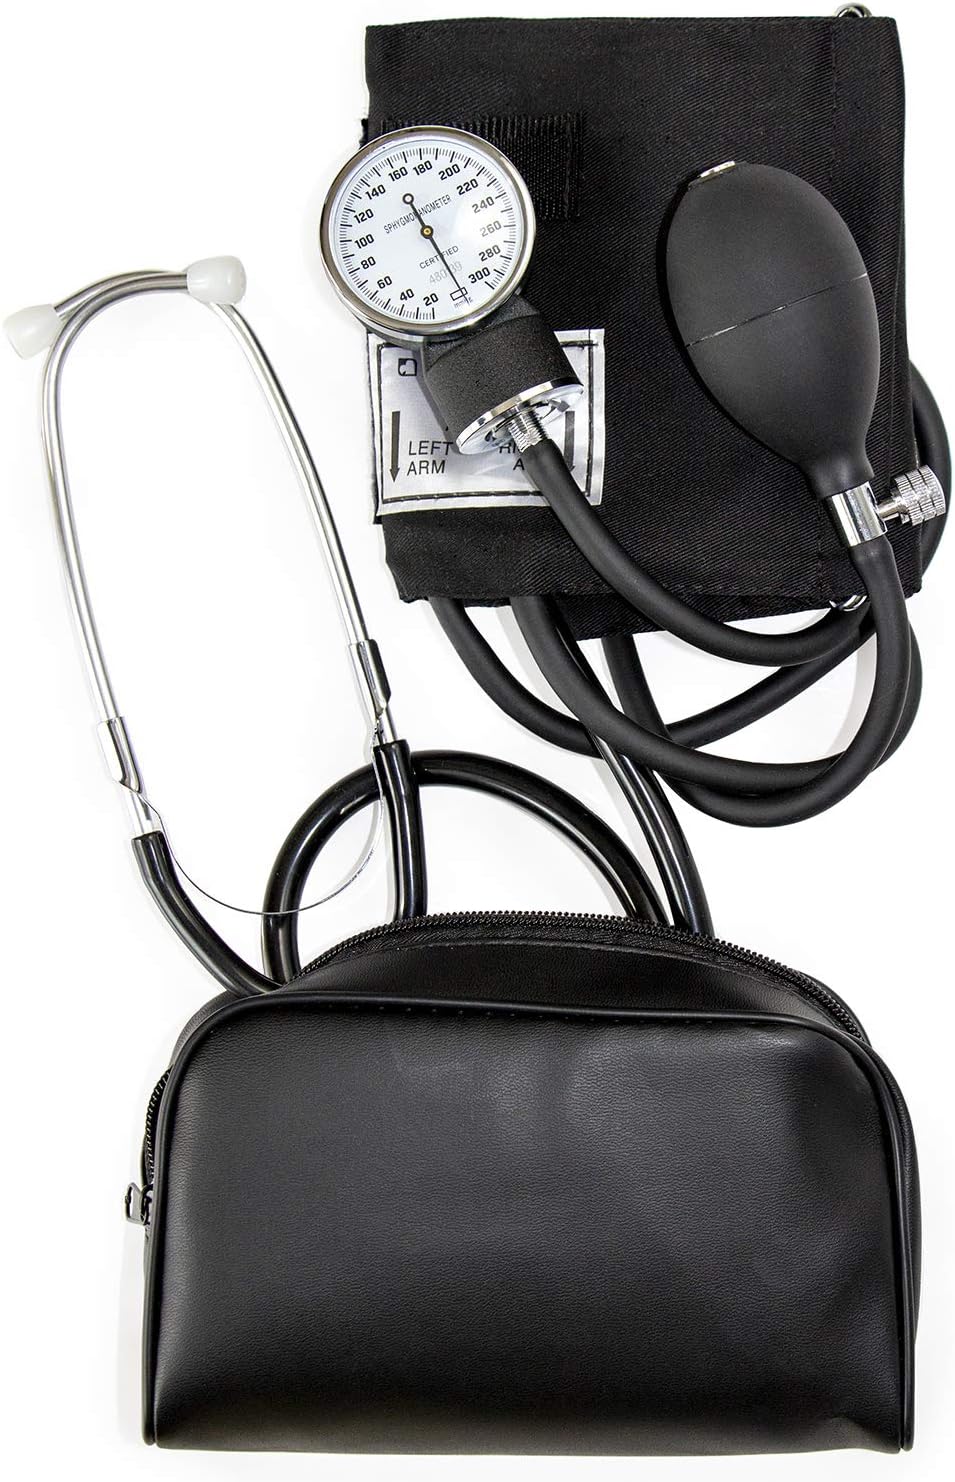 HealthSmart Manual Blood Pressure Monitor, Self Taking [...]